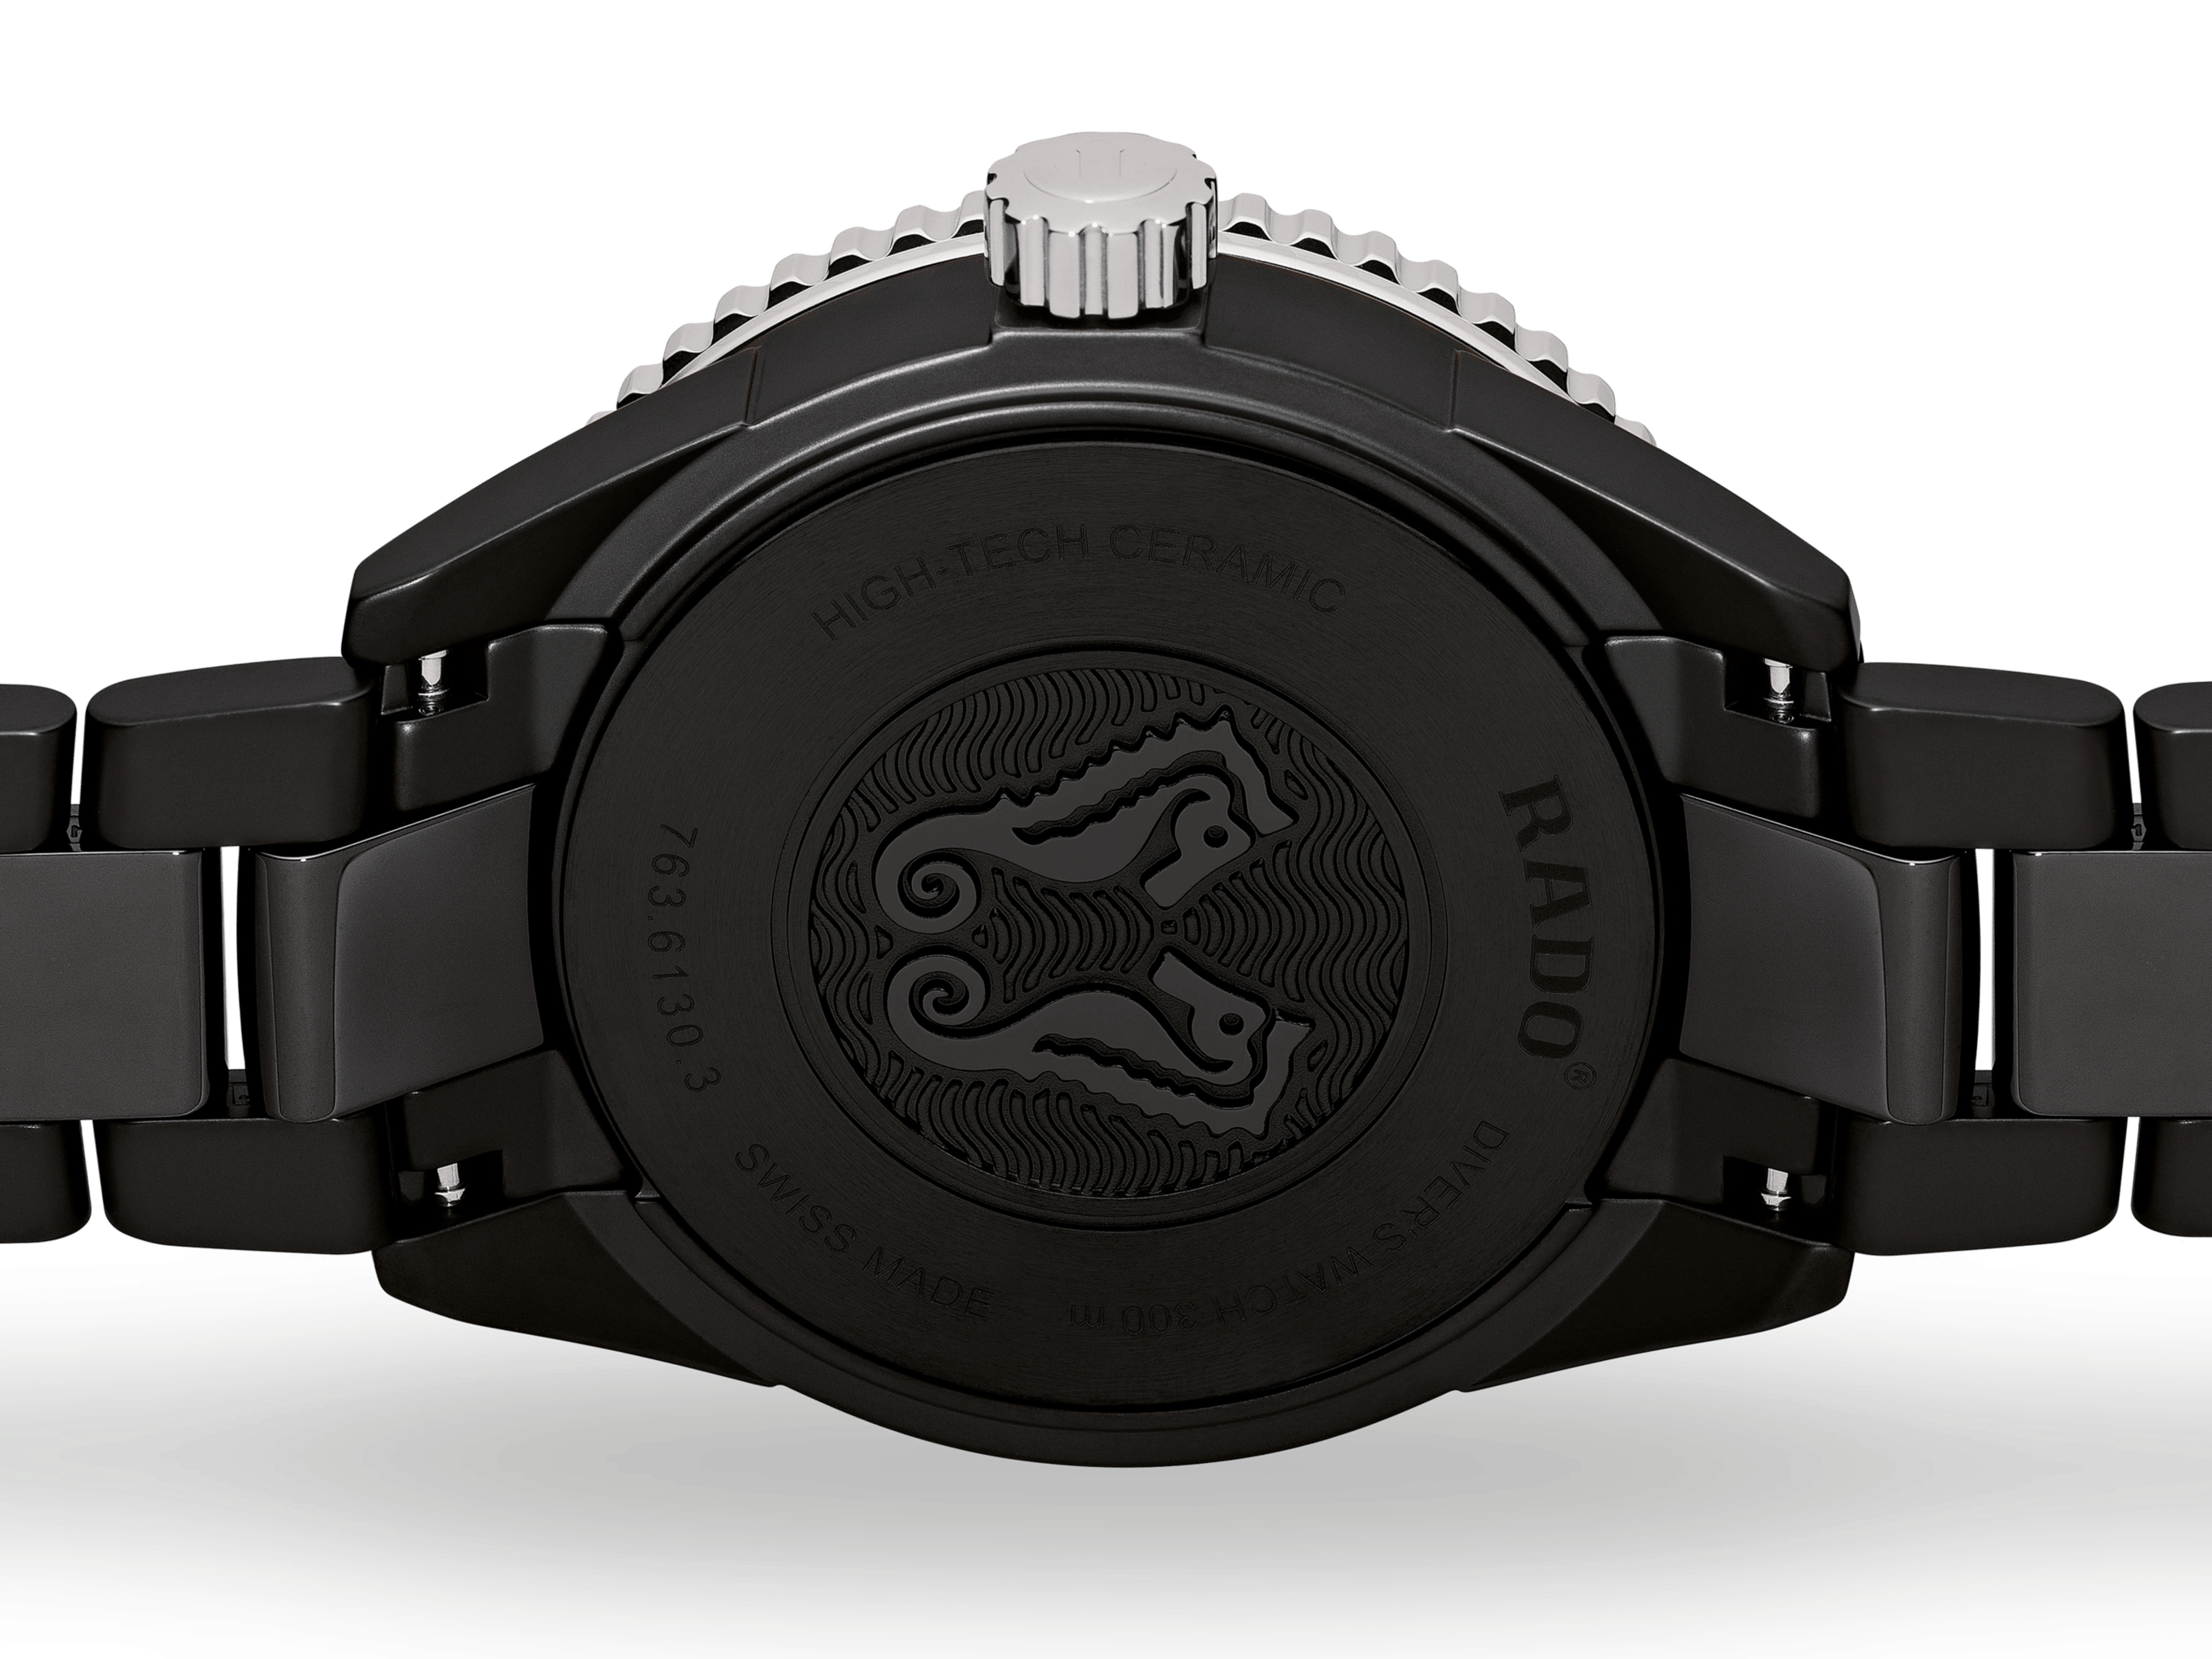 RADO Captain Cook Black High-Tech Ceramic Diver 43mm Men's Watch R32129152